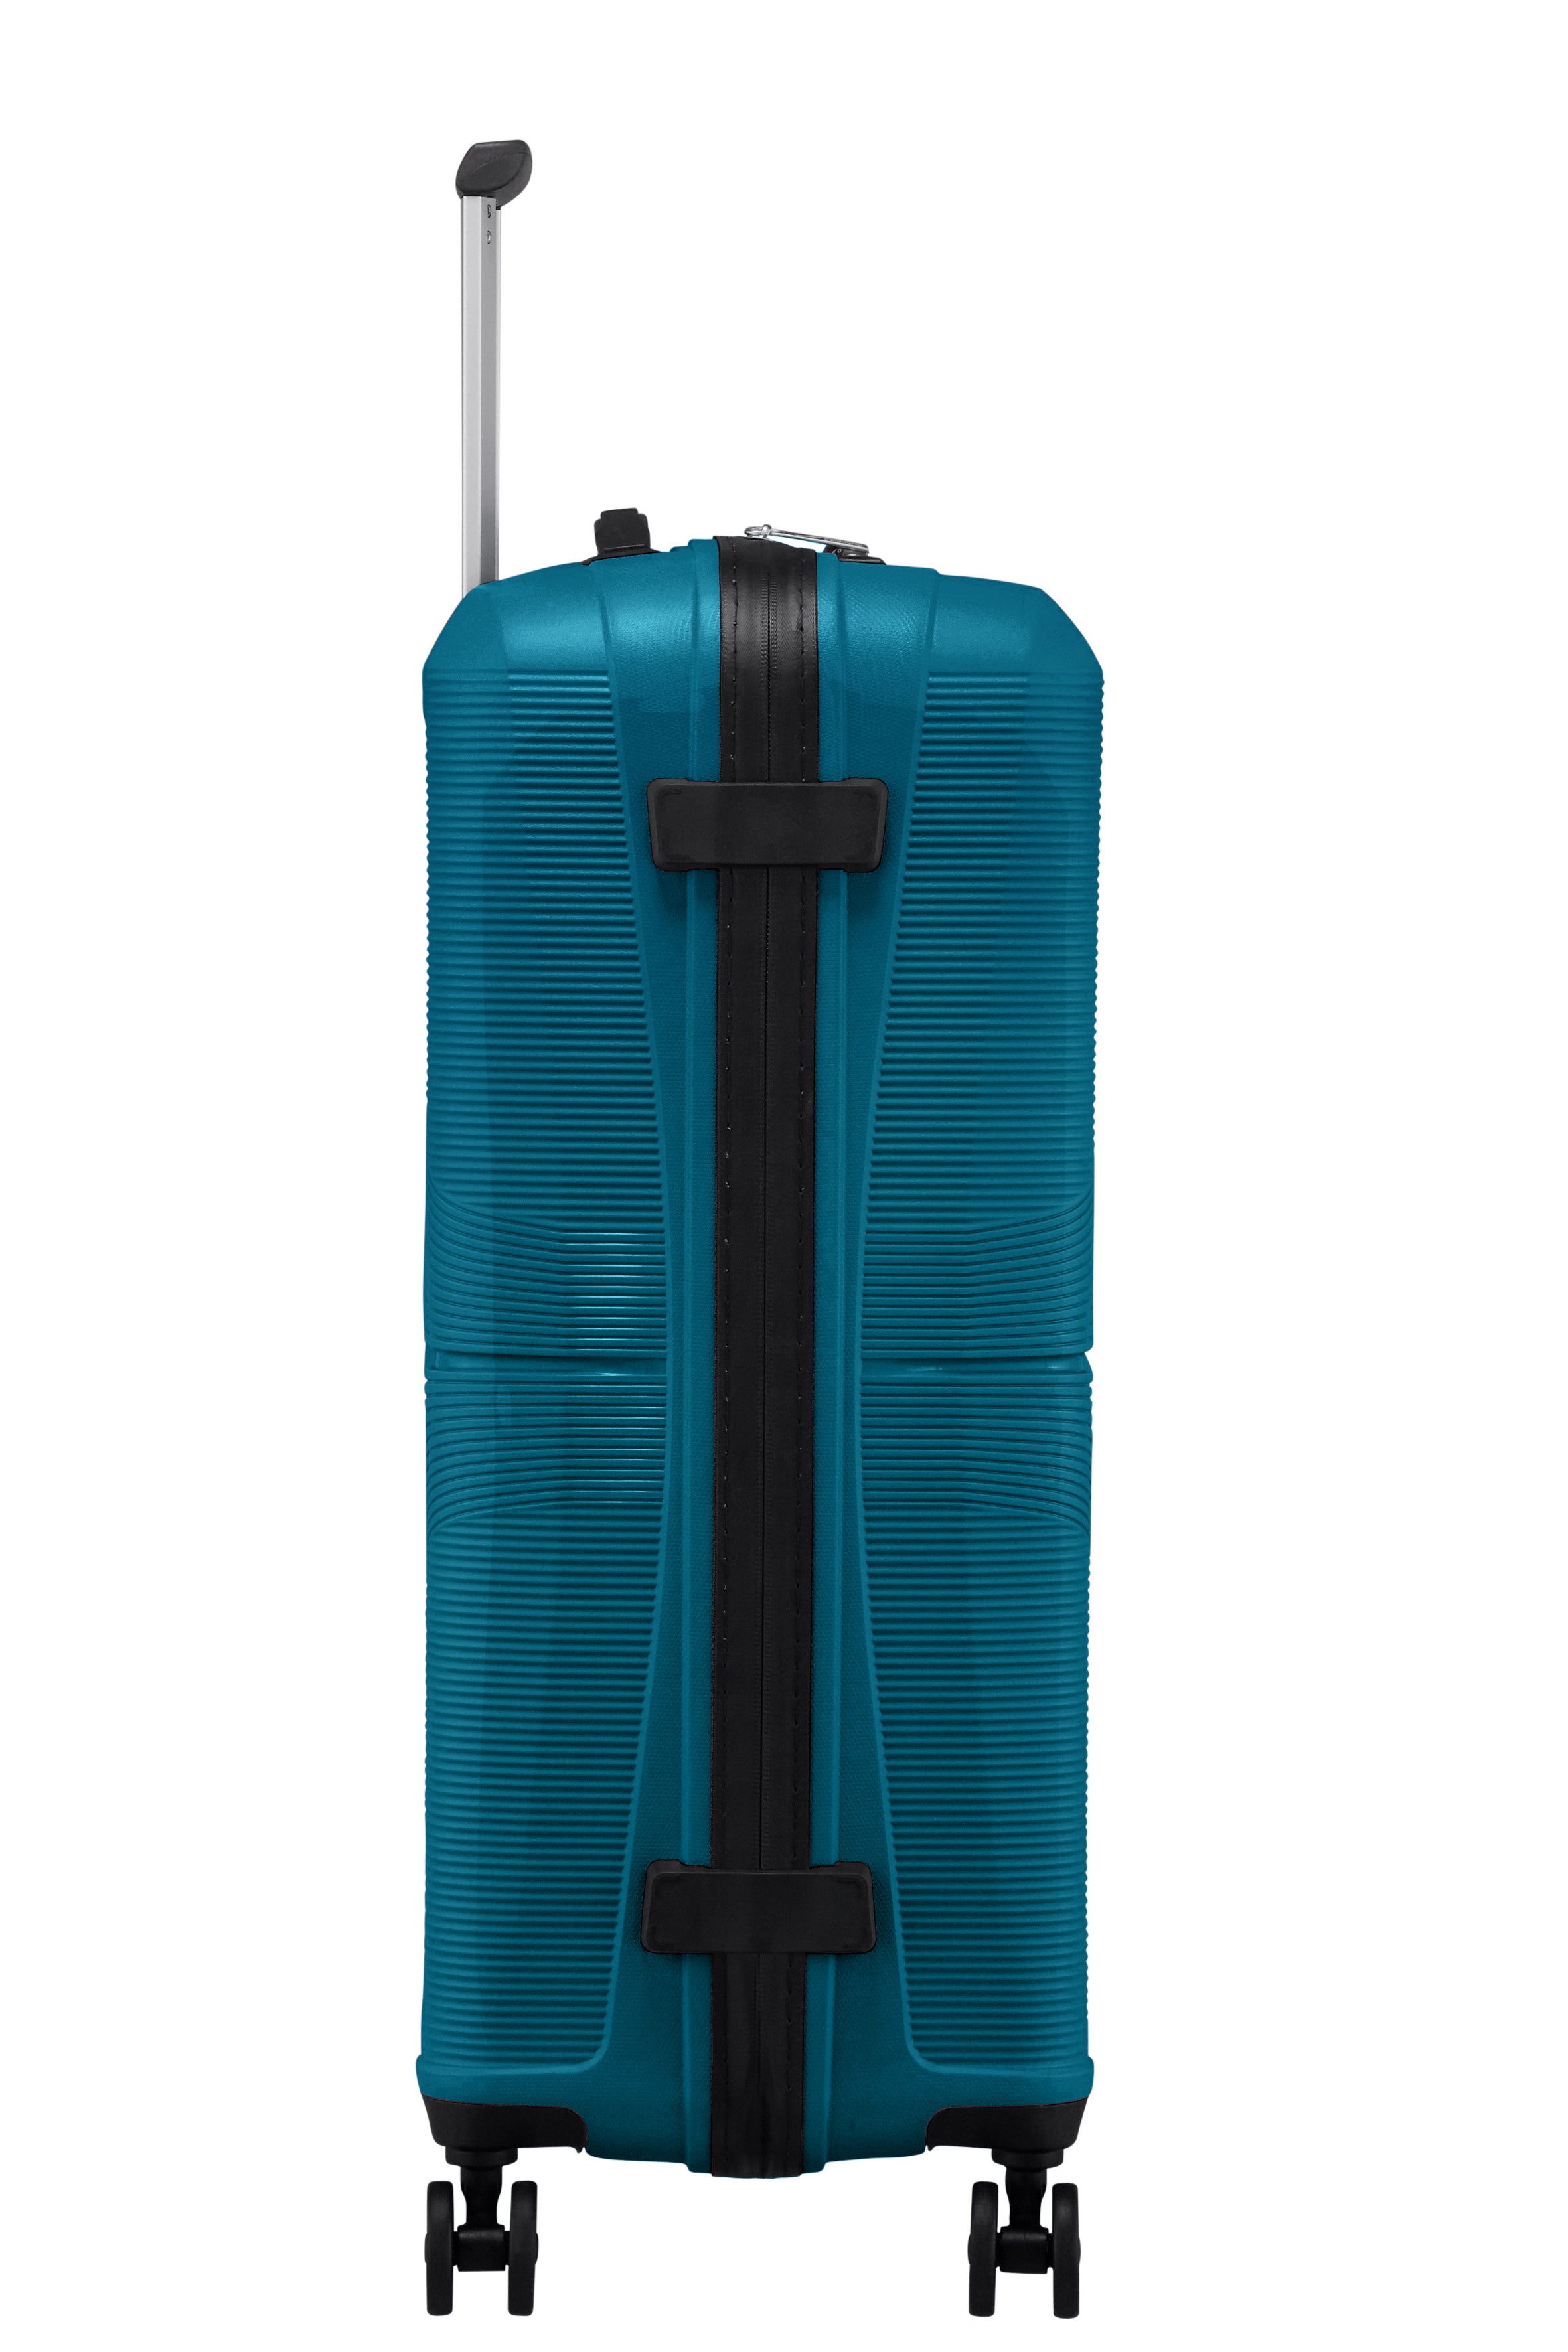 American Tourister - Airconic 67cm Medium Suitcase - Deep Ocean-5